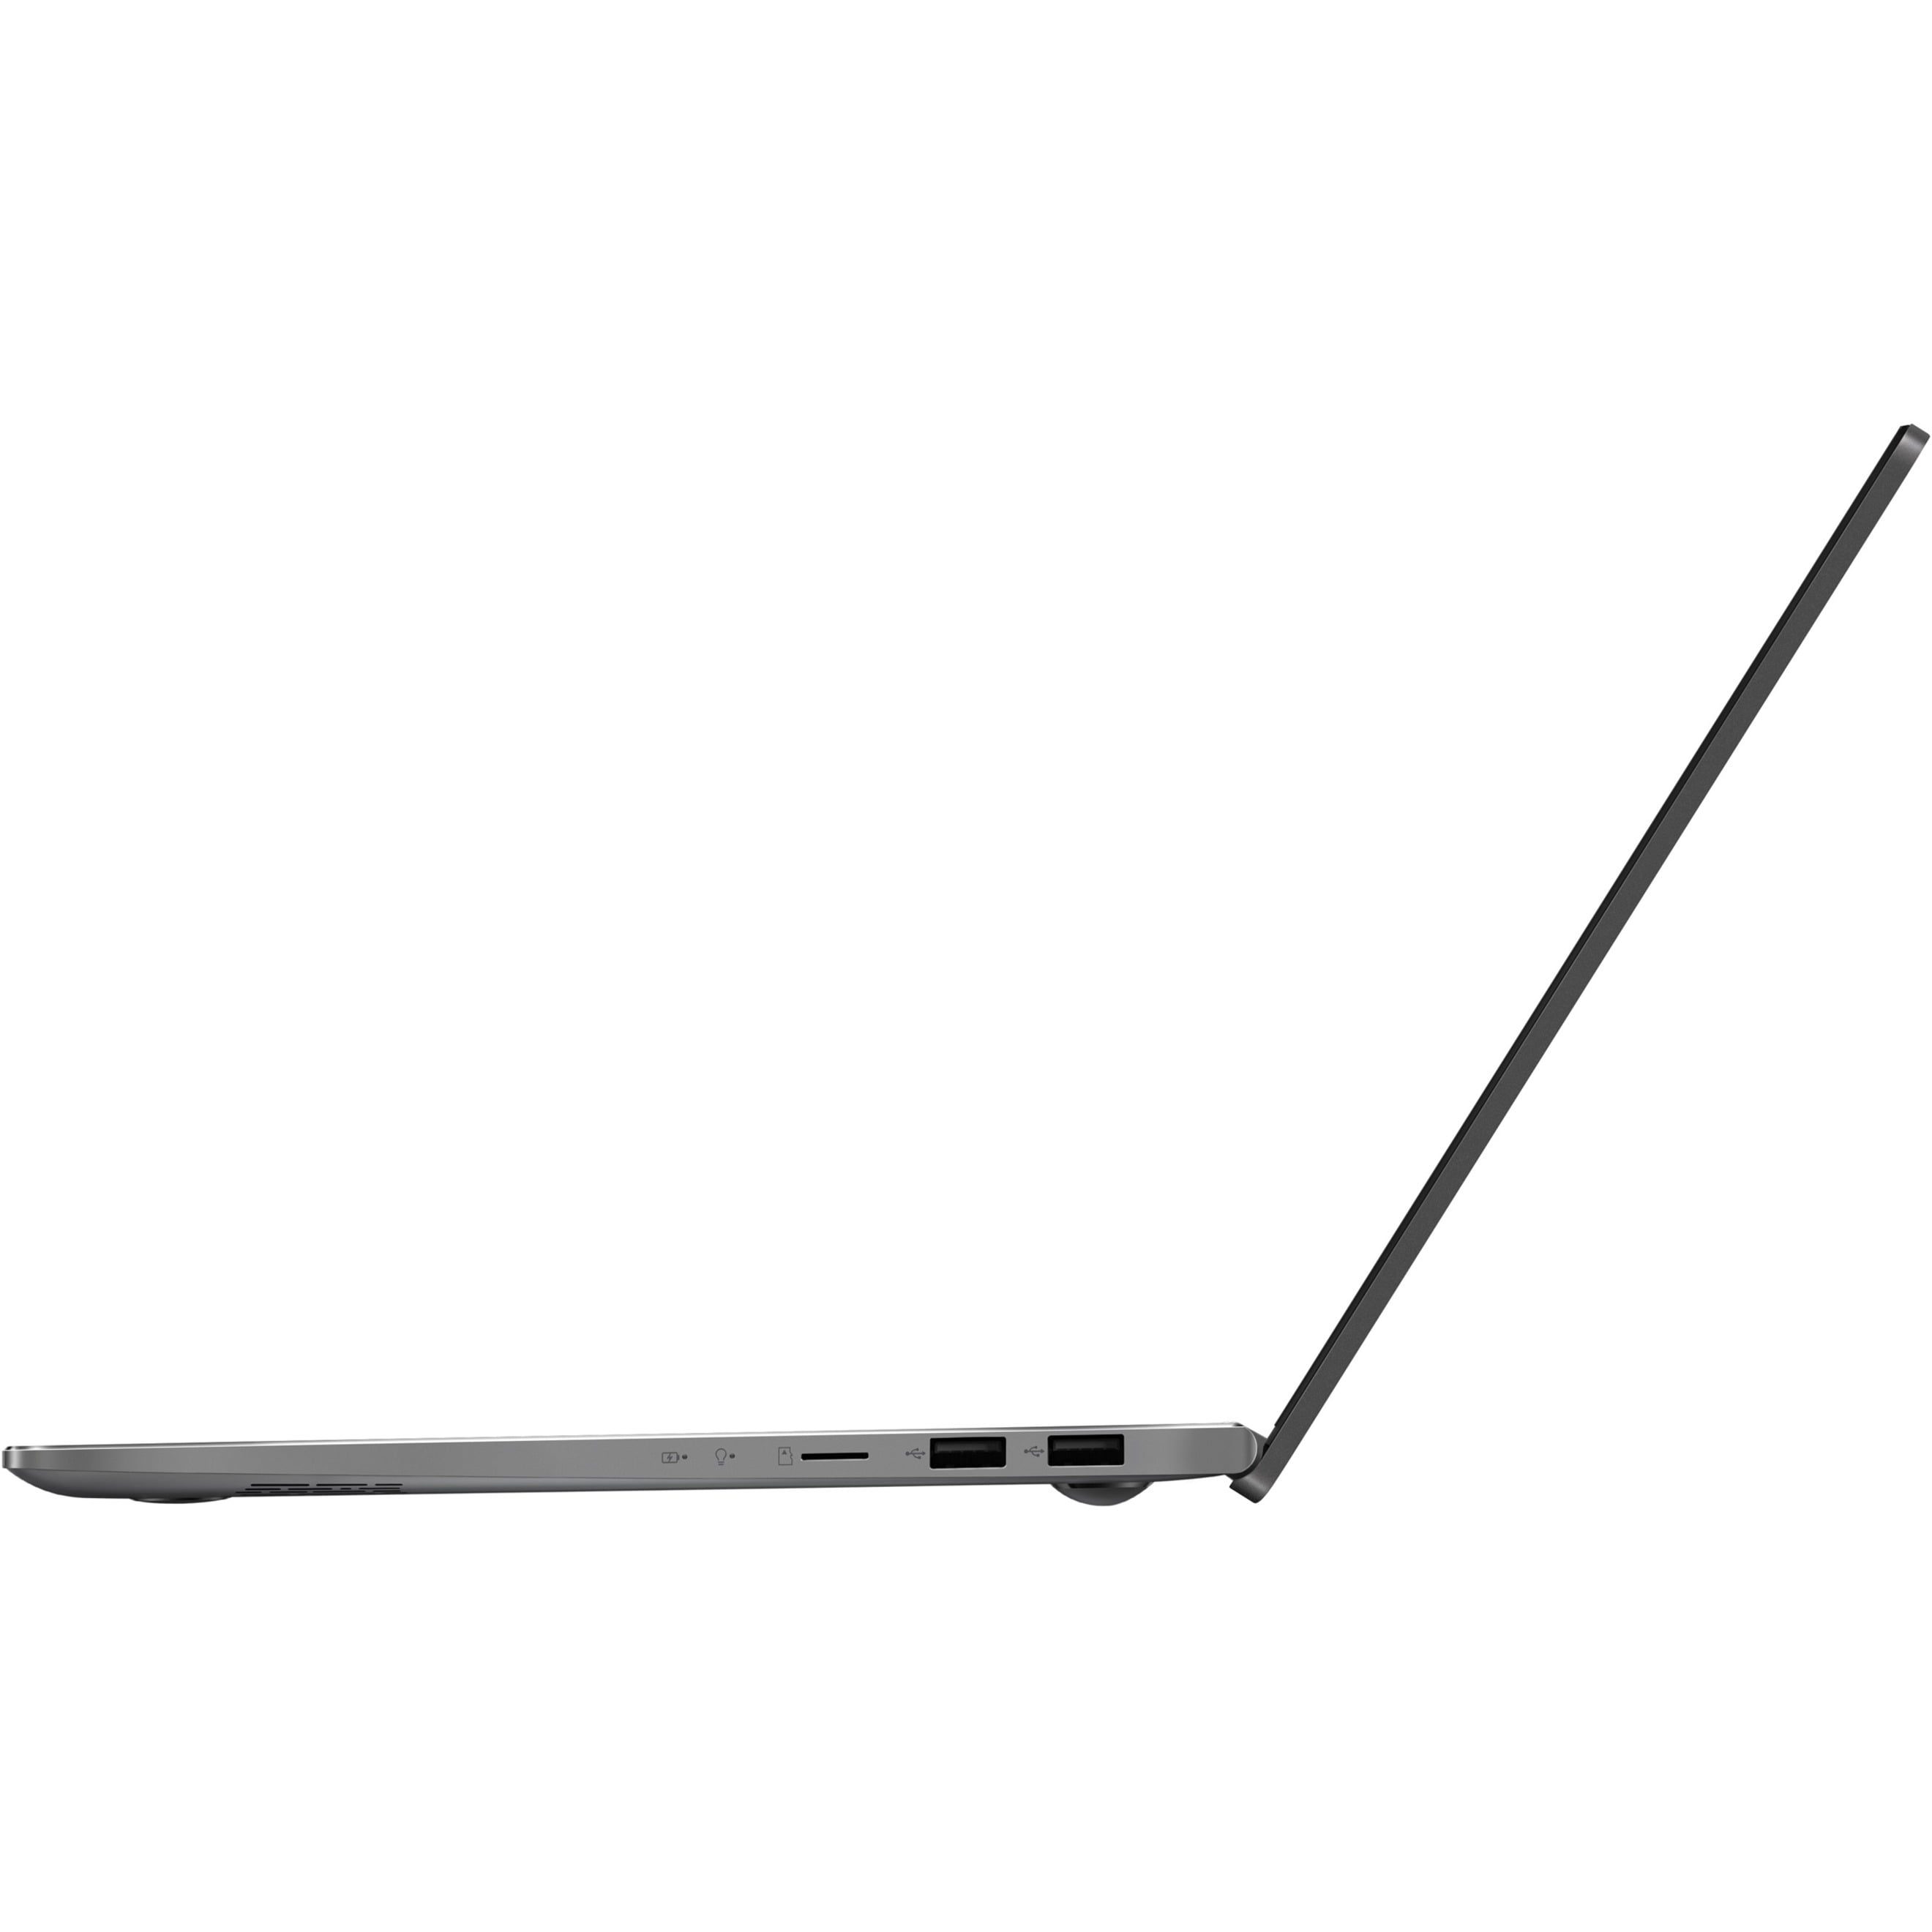 ASUS VivoBook S14 14 FHD Laptop, Intel Core i5-1135G7, 8GB RAM